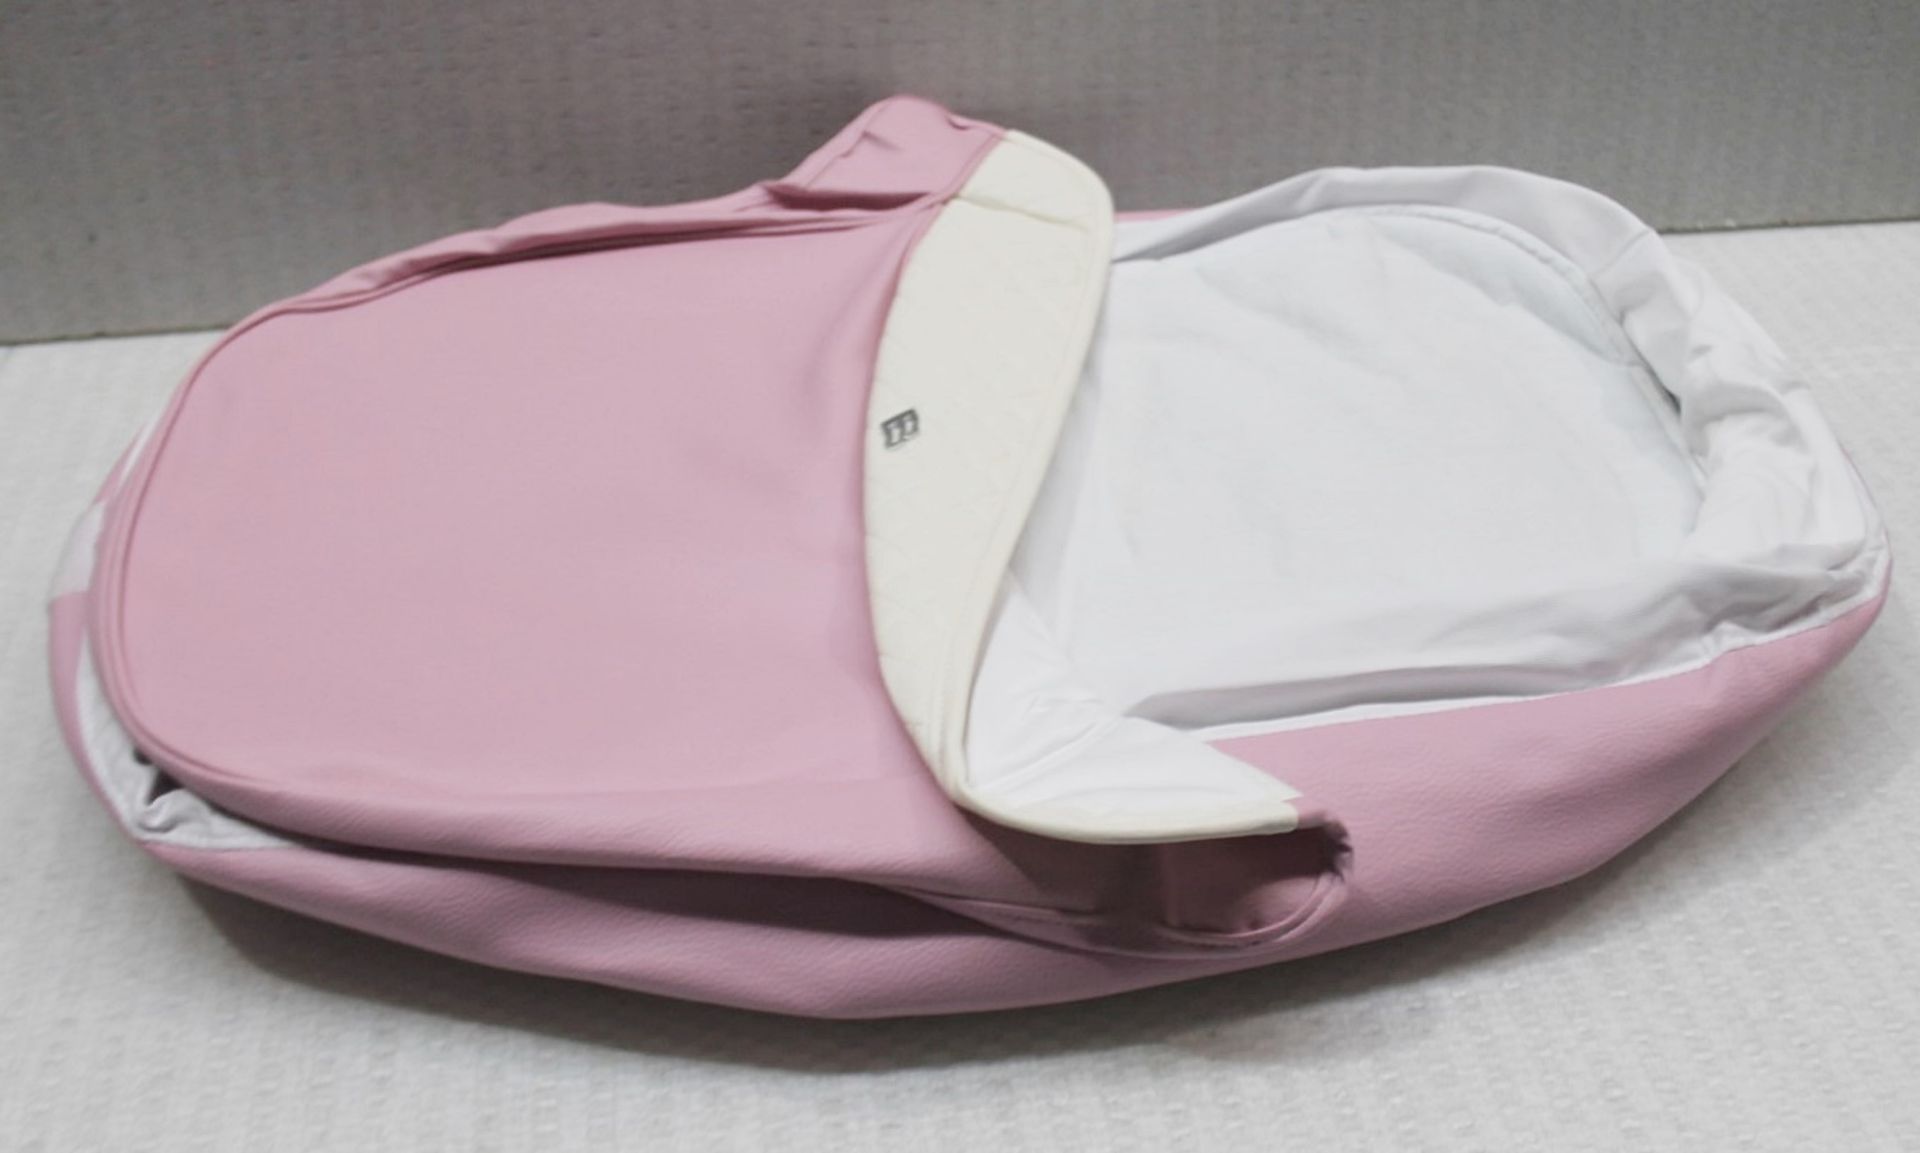 1 x BEBECAR 'Stylo' Premium Dolls Pram + Bag In Candy Pink - Original Price £325.00 - Image 9 of 13